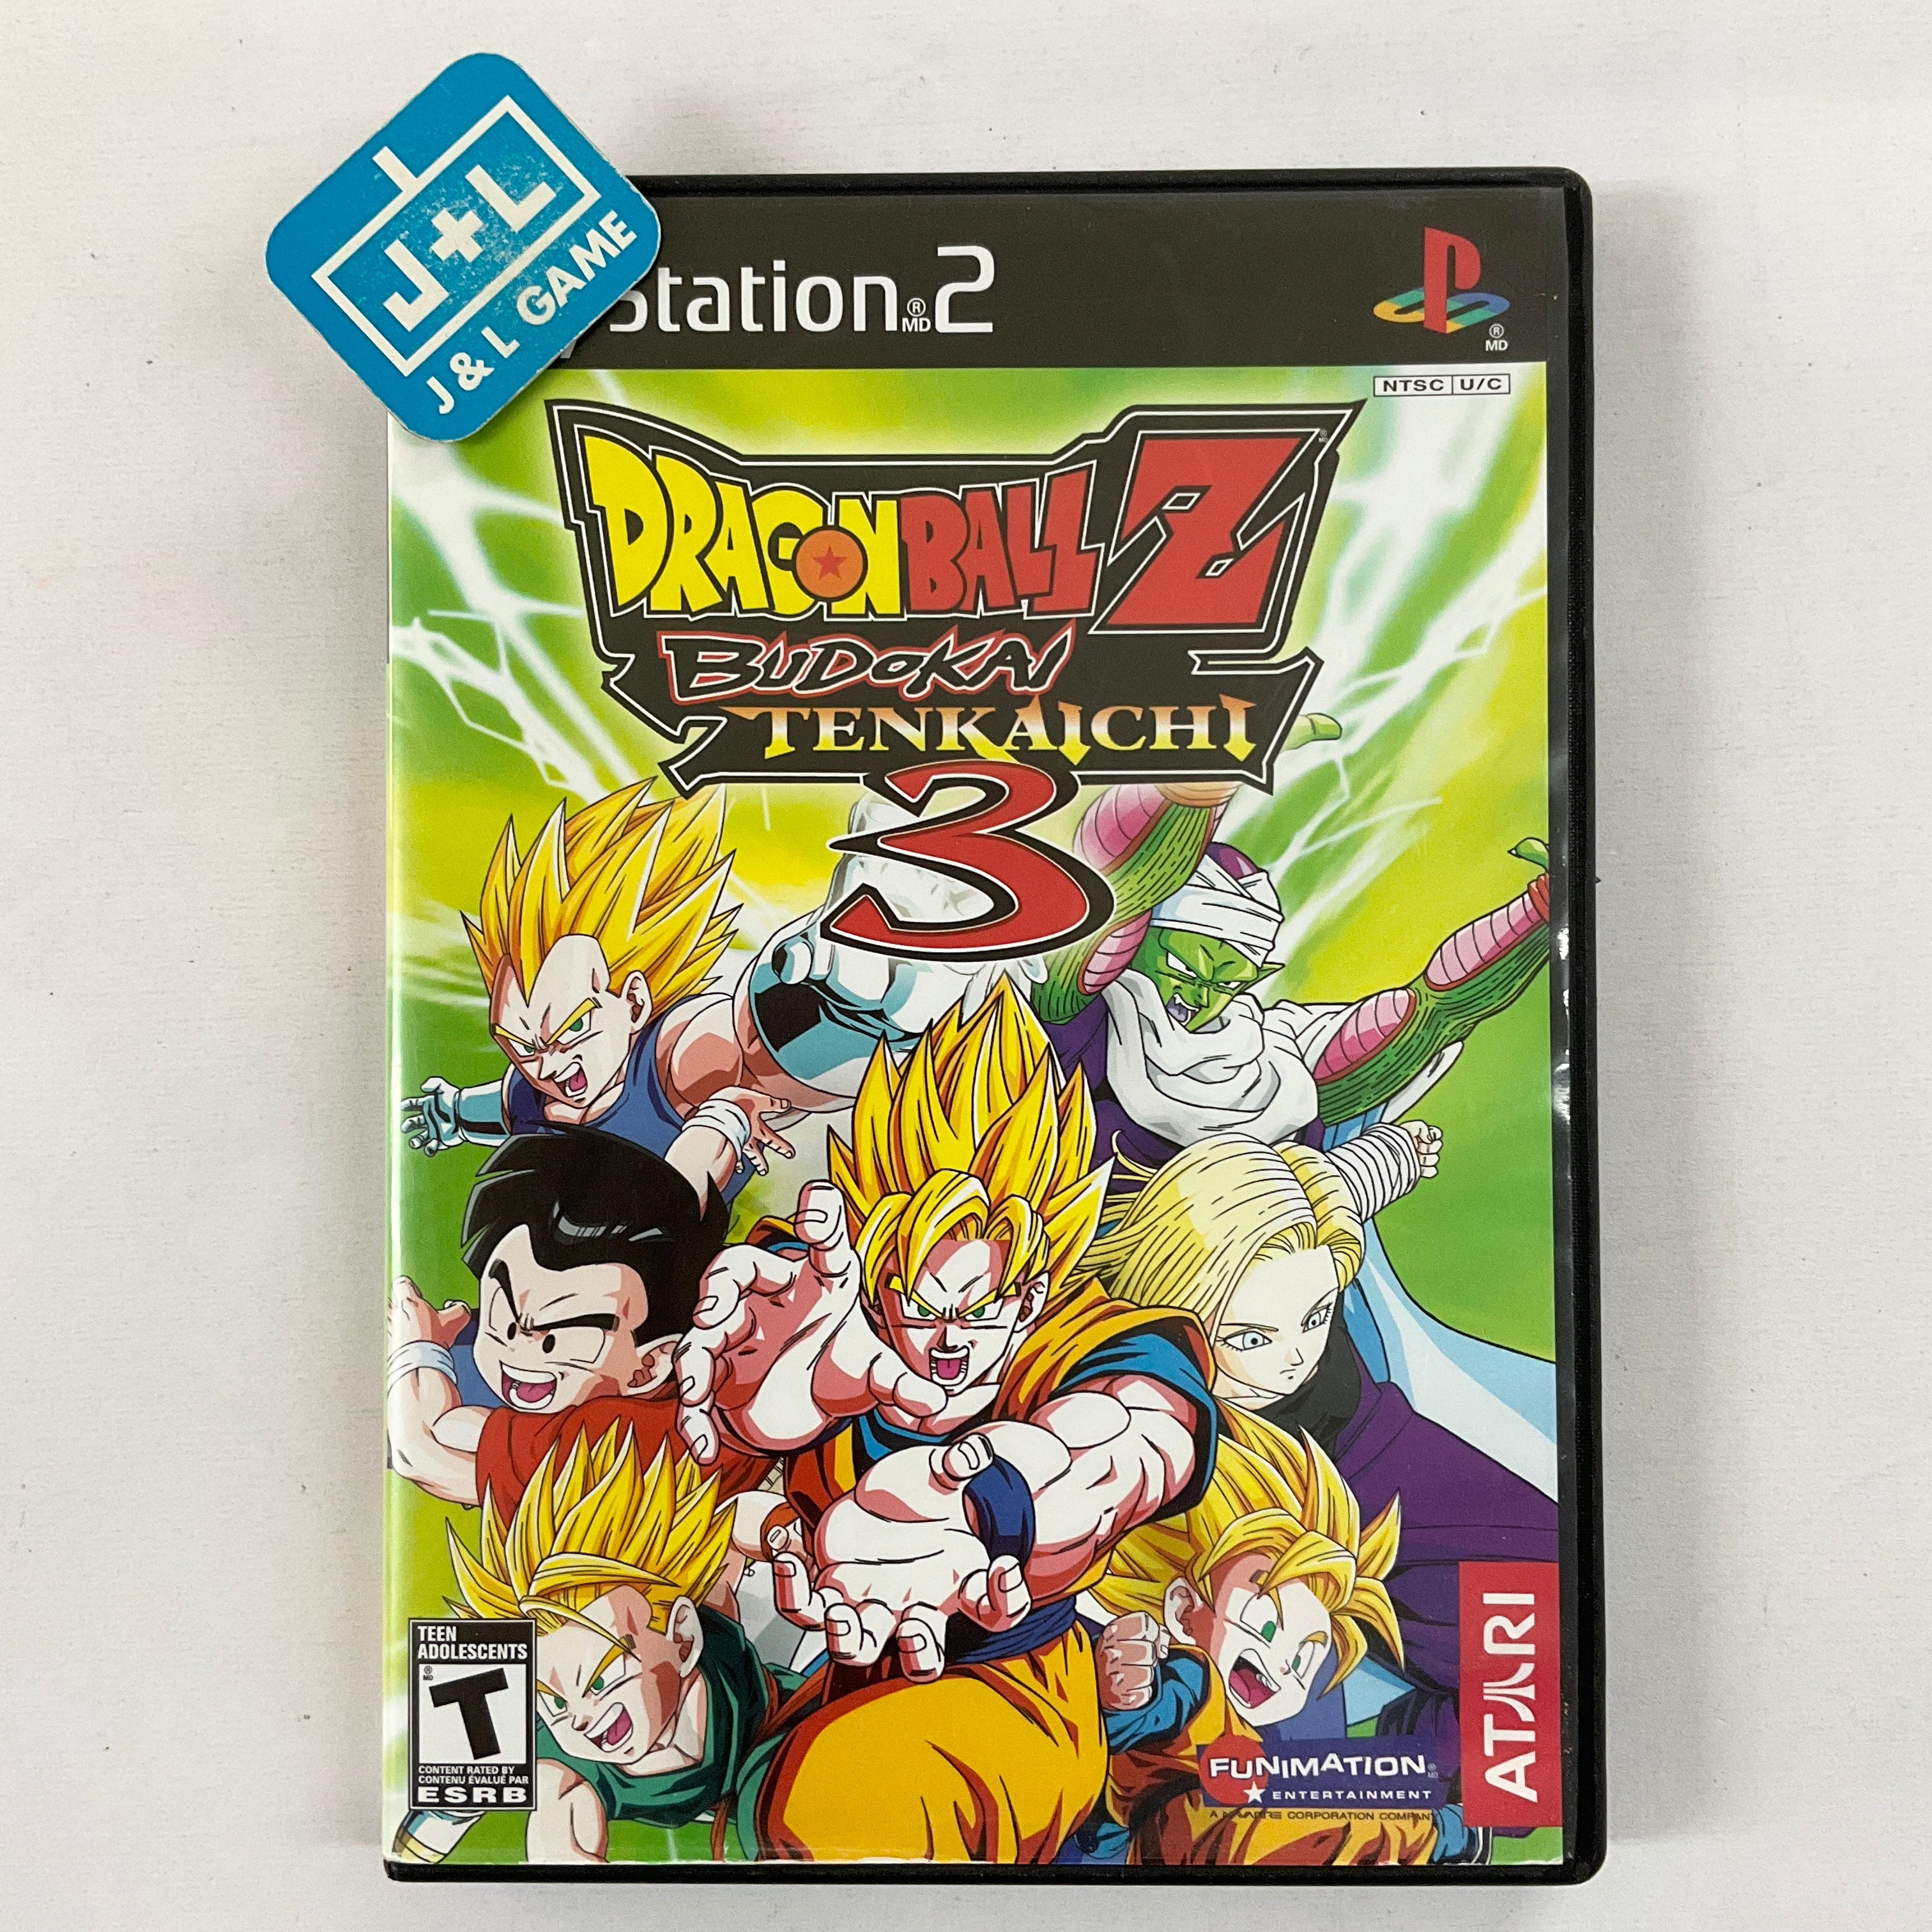 Dragon Ball Z: Budokai Tenkaichi 3 (Canadian Cover) - (PS2) Playstation 2 [Pre-Owned] Video Games Atari Inc.   